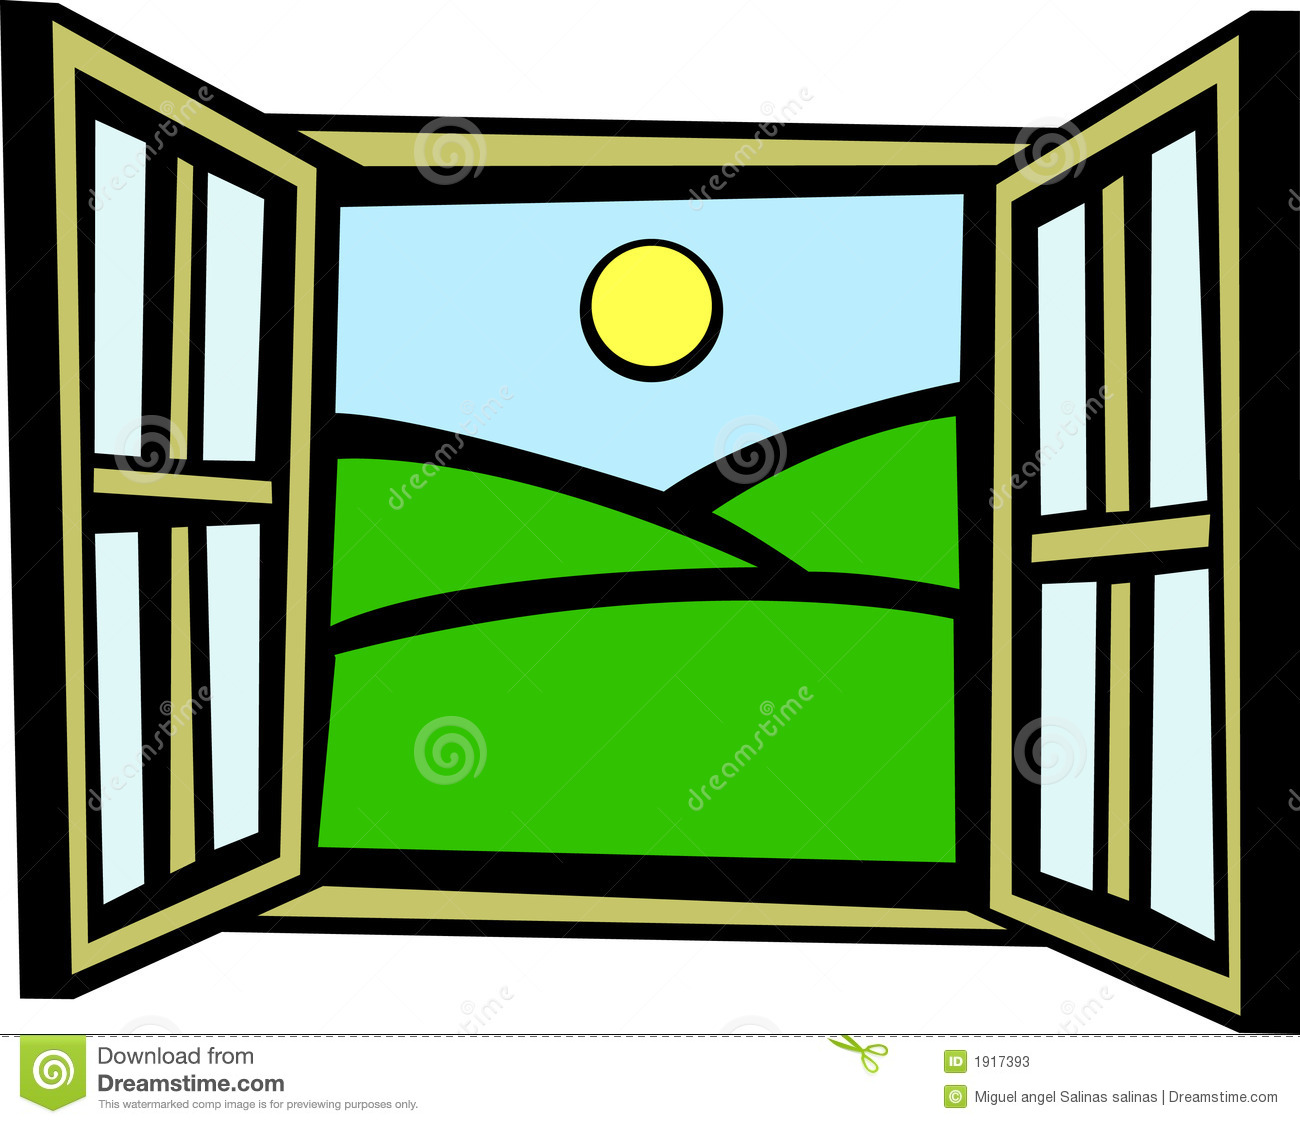 ... A door and windows - Illu